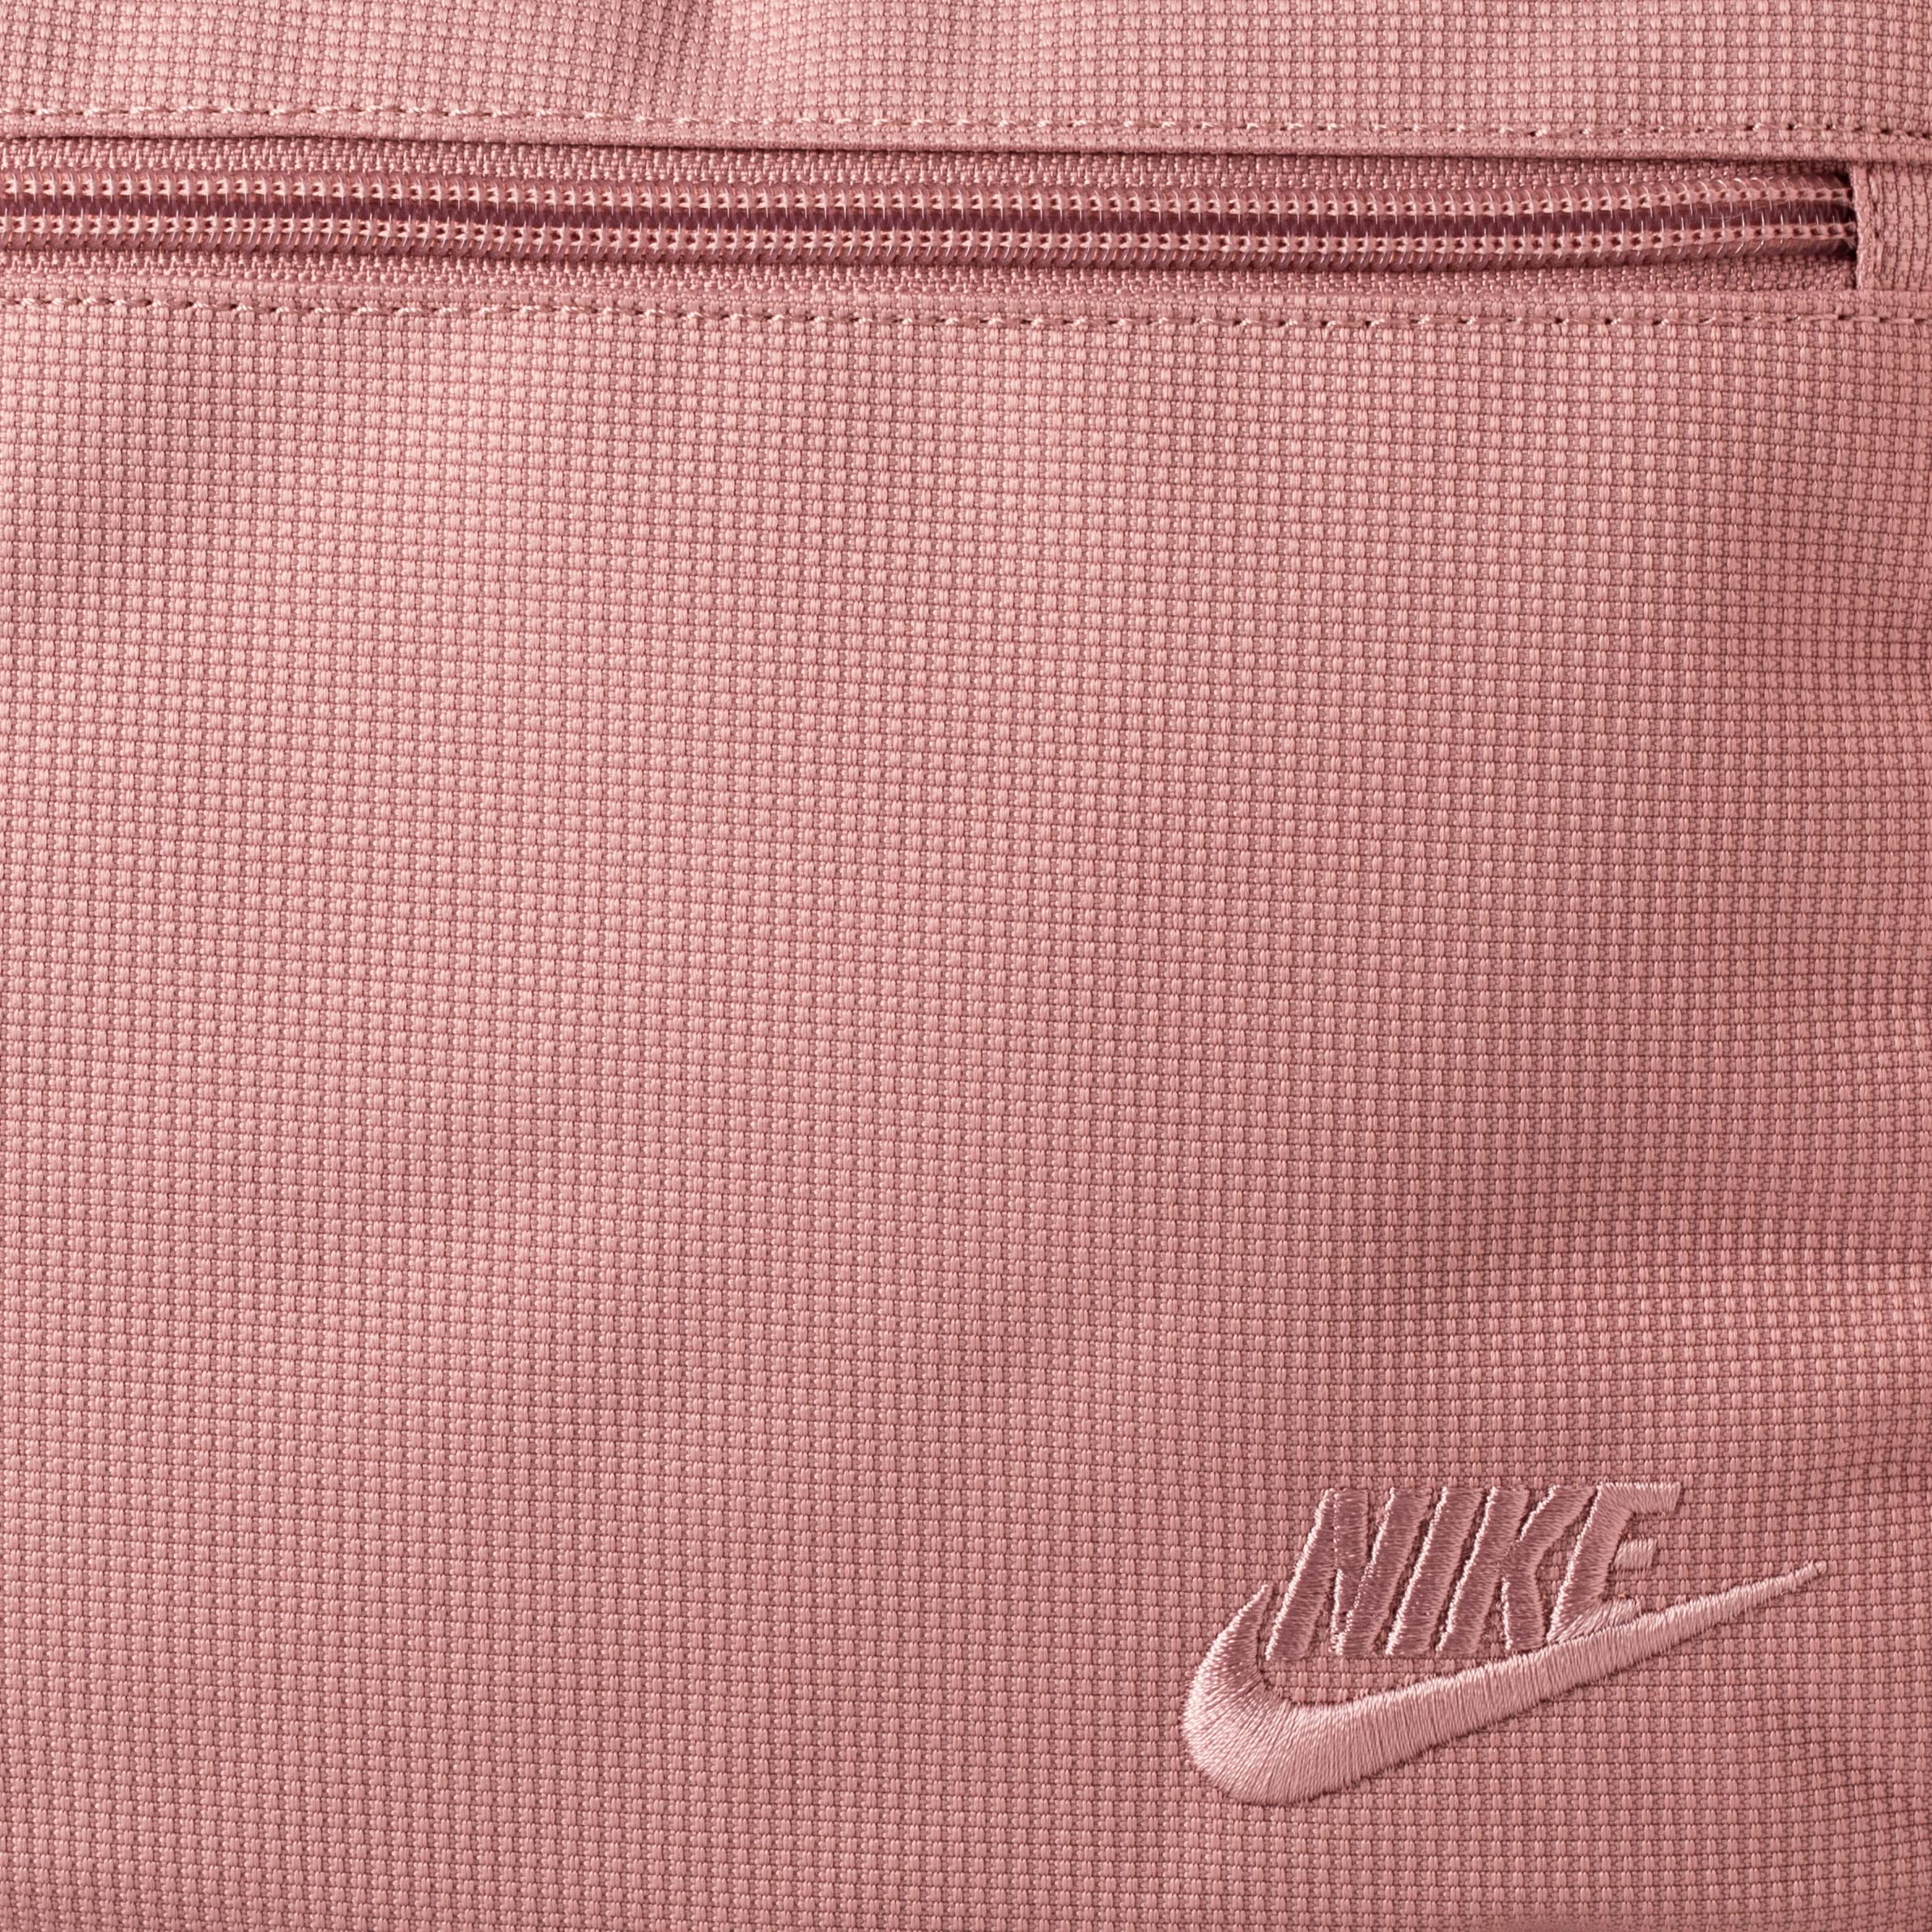 Nike Heritage Eugene Backpack,One Size Pink